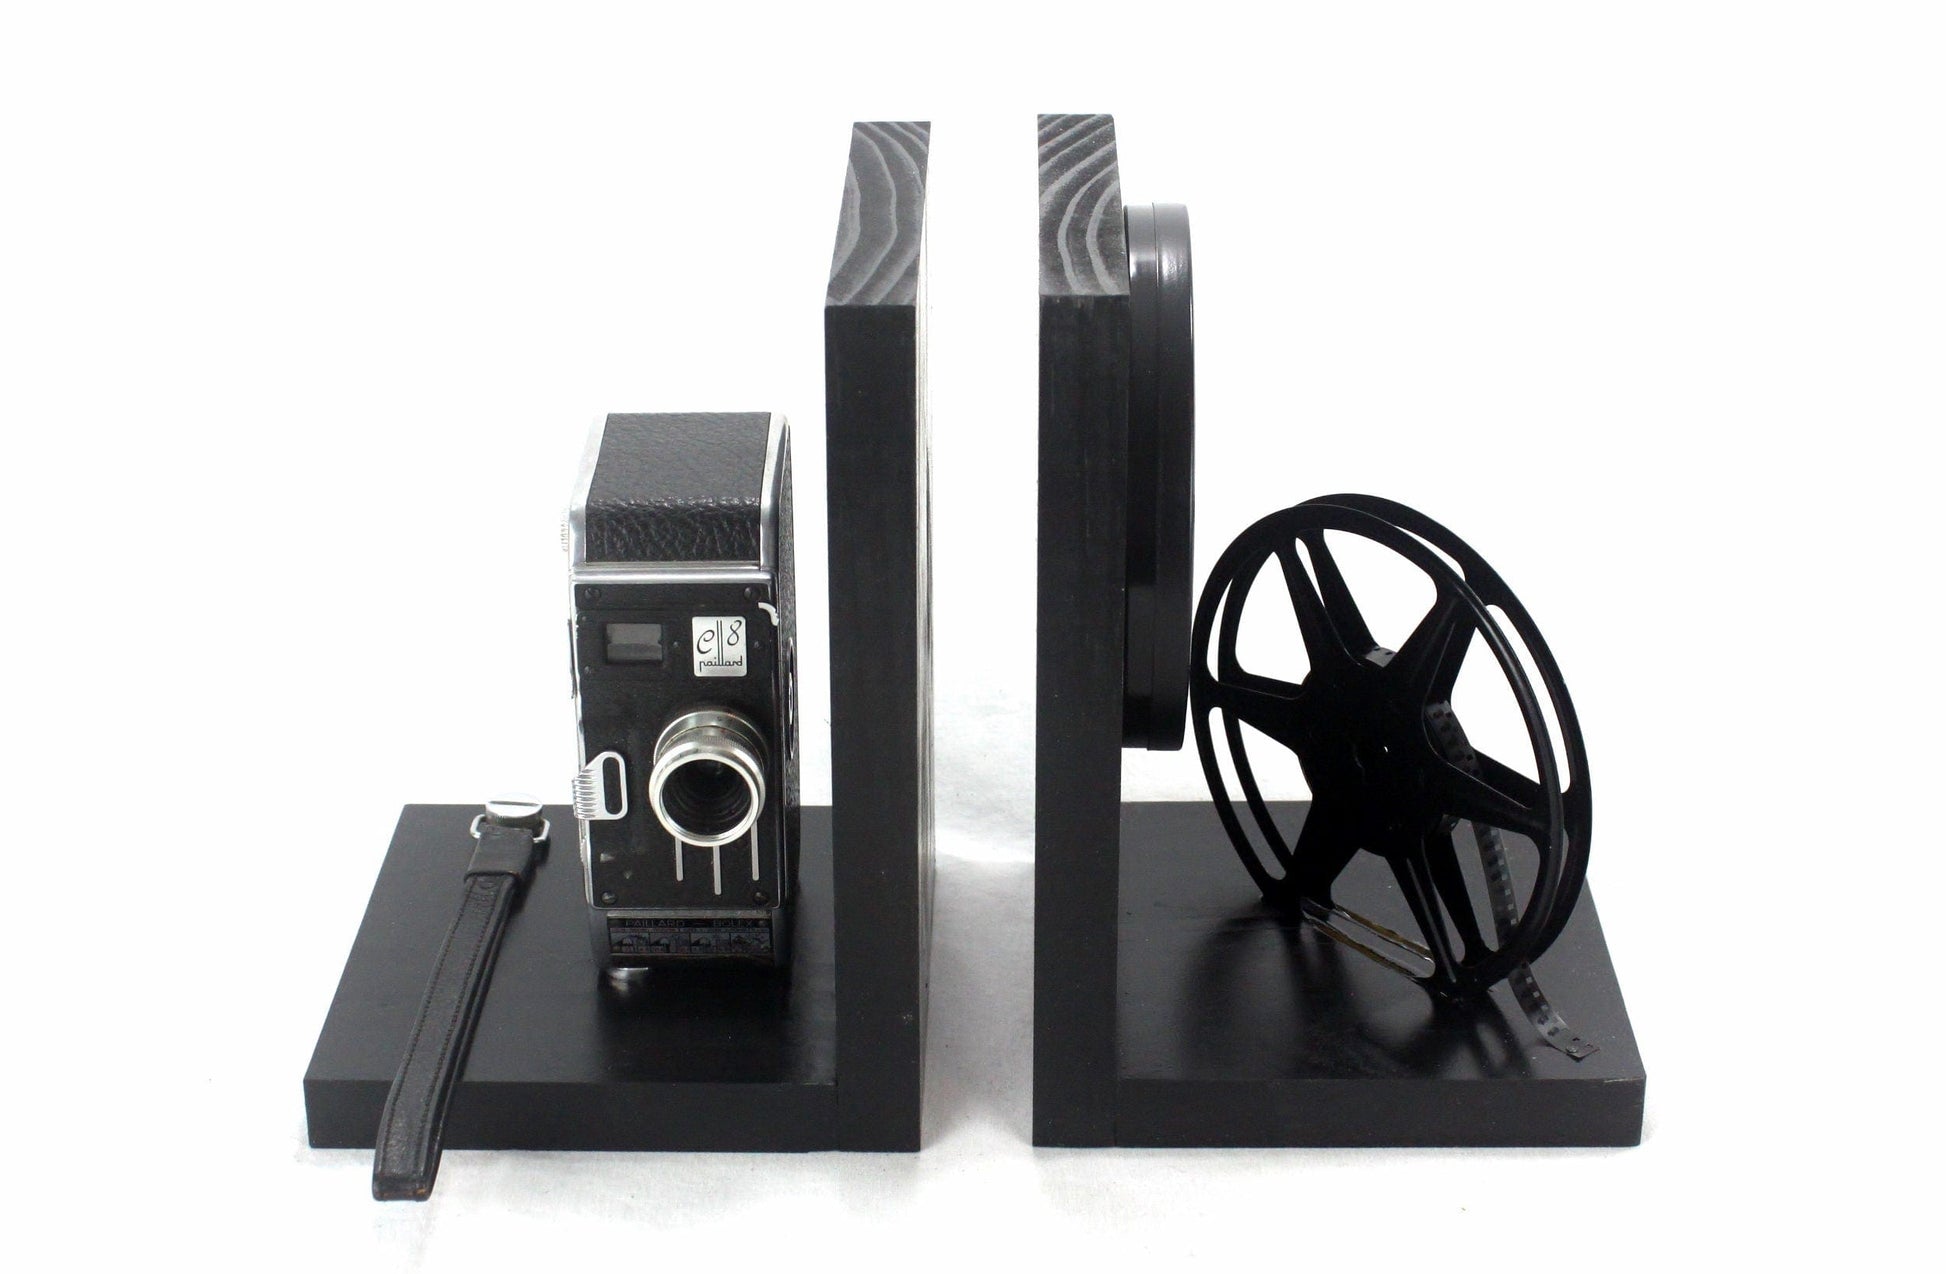 LightAndTimeArt Bookends Vintage Camera Bookends - Bolex Paillard C8 - DVD Holder - Movie Theater Decor